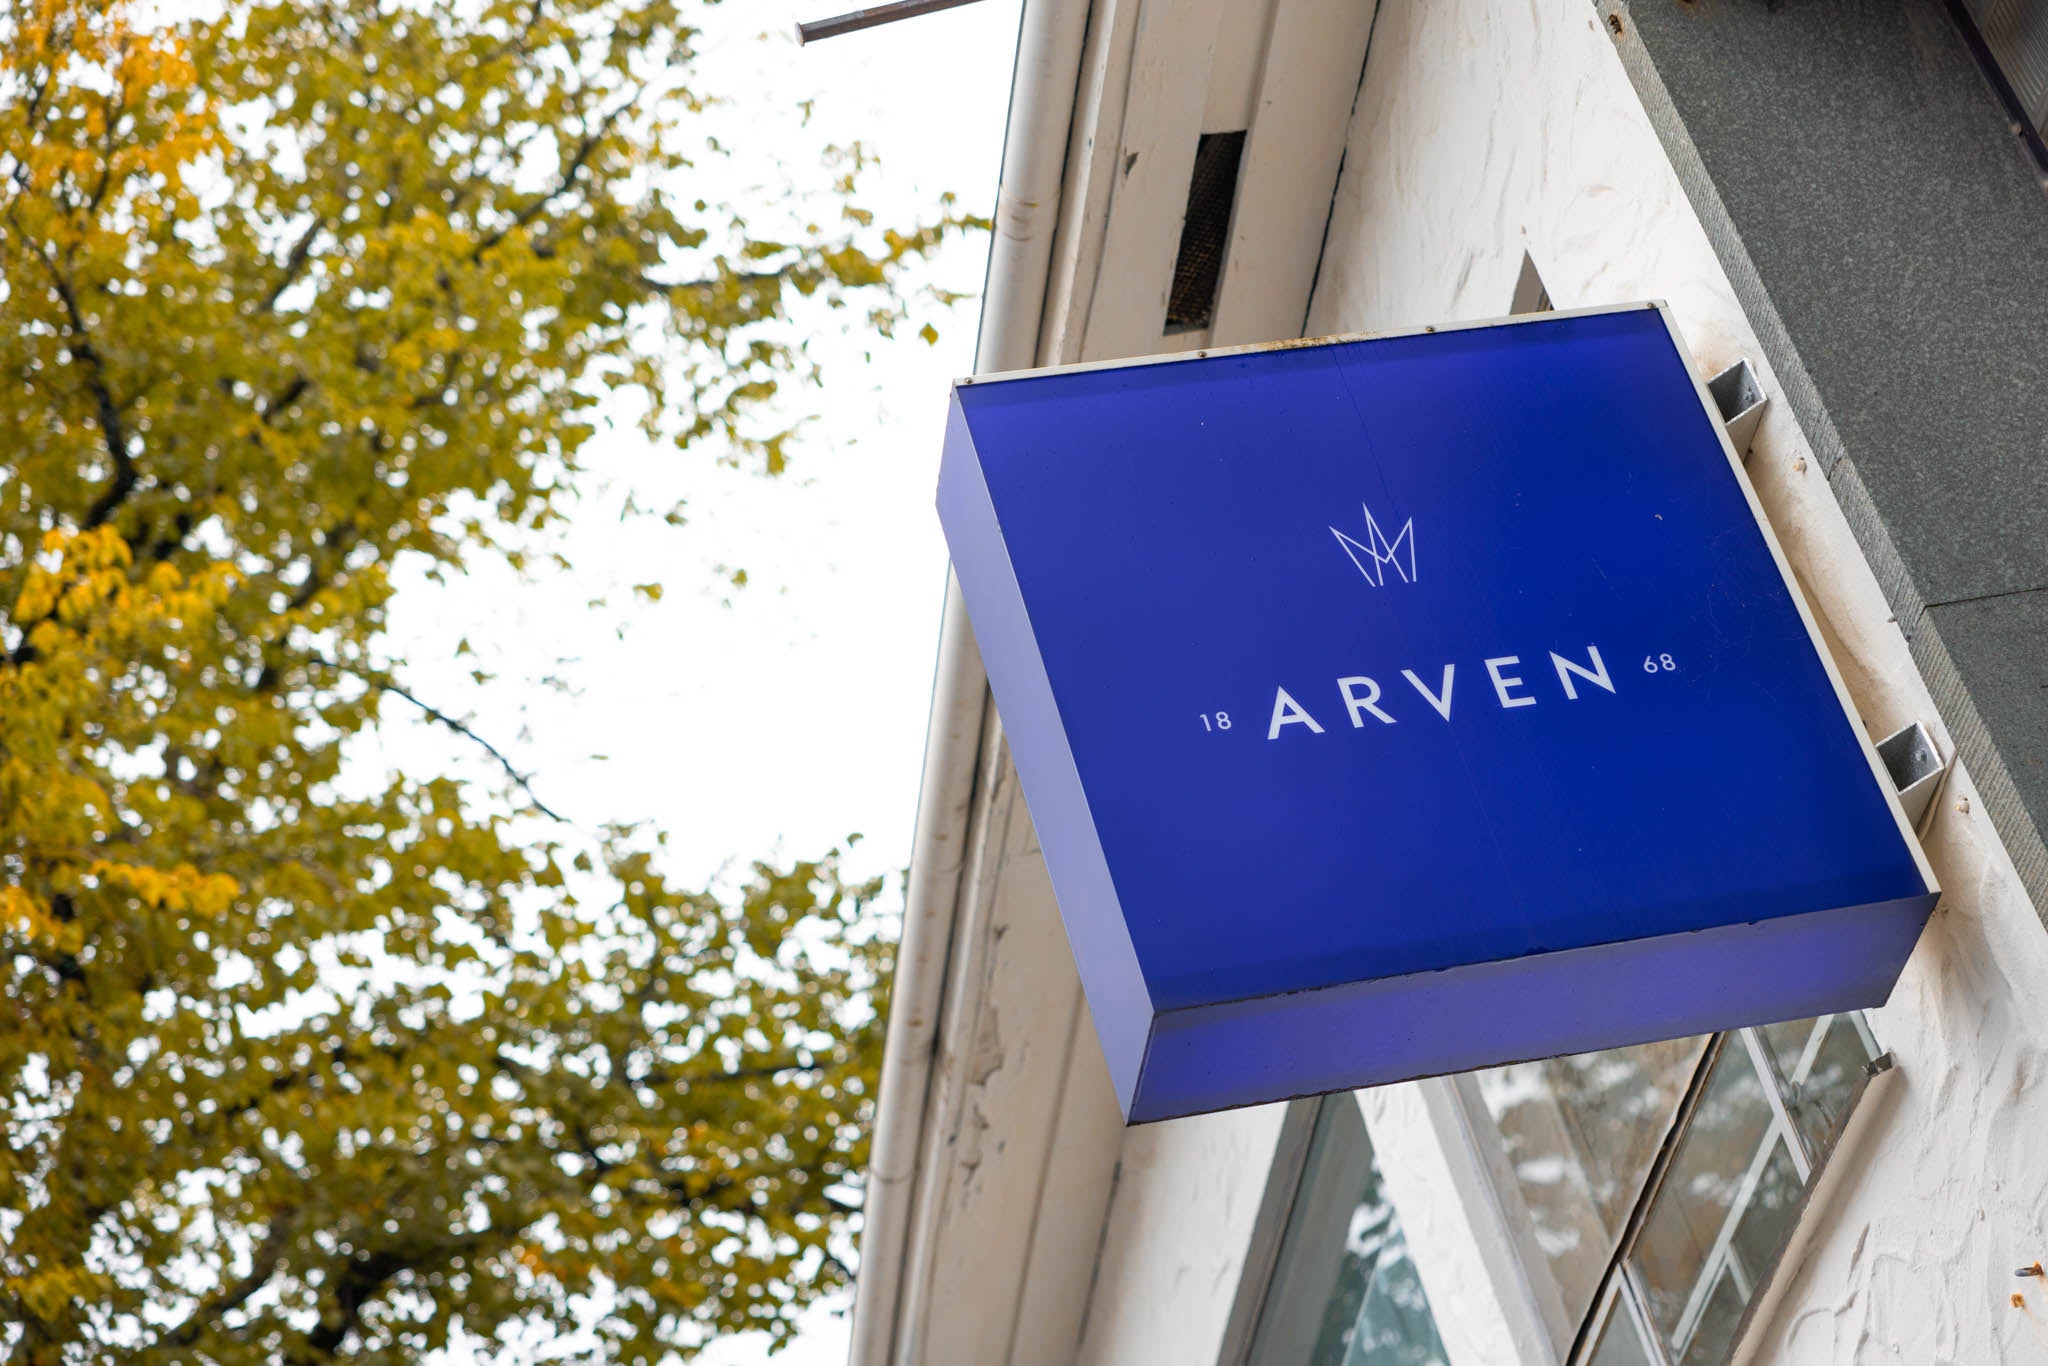 Arven, the producer of Ekenberg jewellery